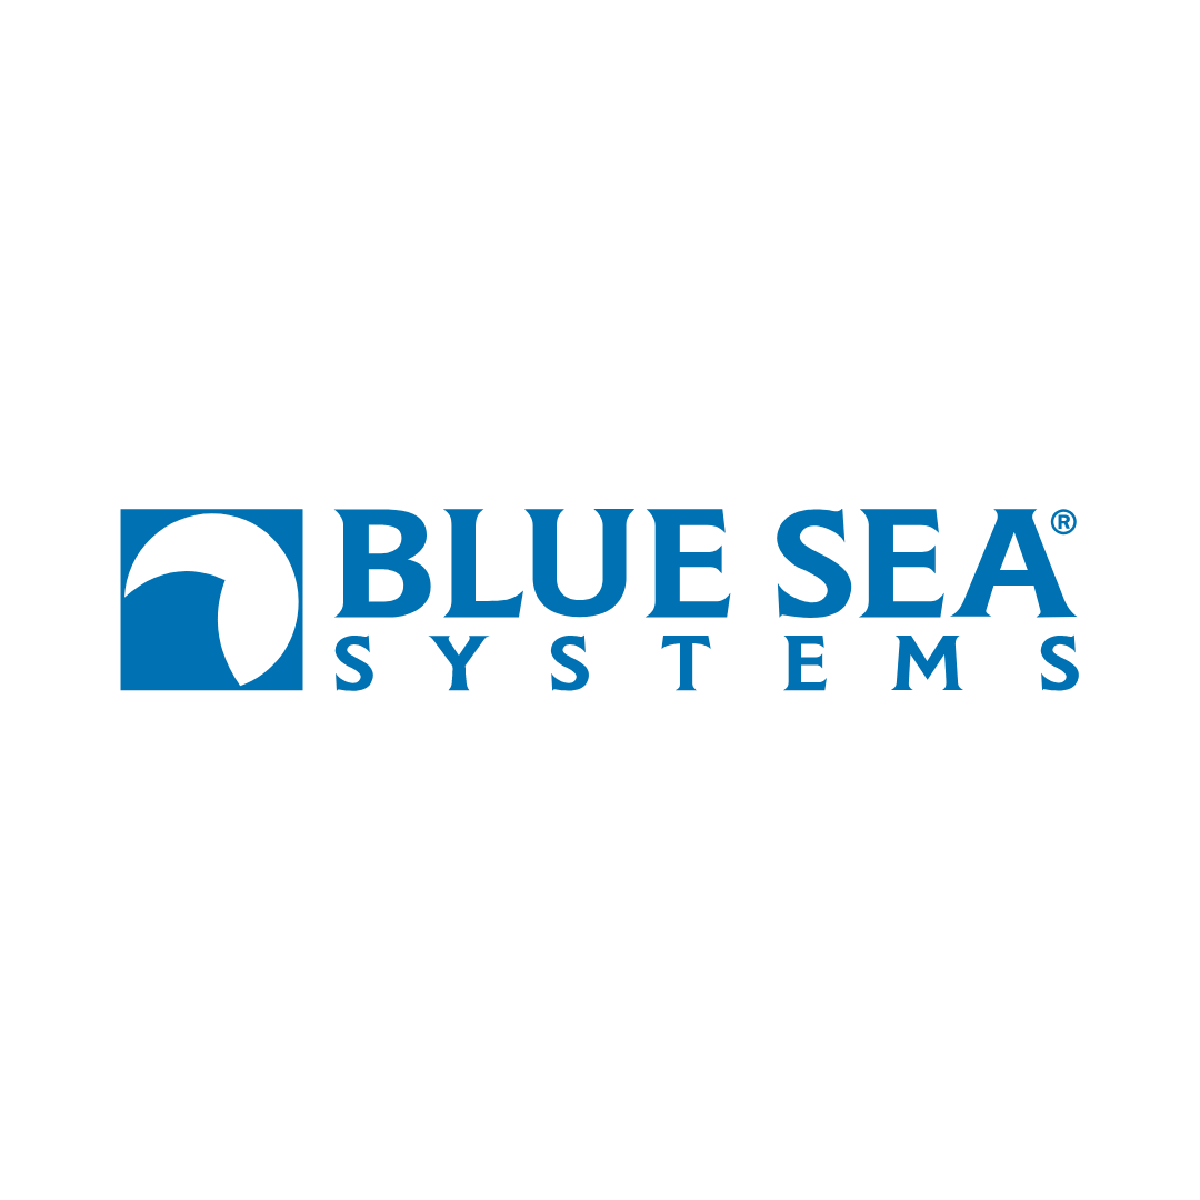 Blue Sea M2 OLED Bilge Monitor (BS-1842B)